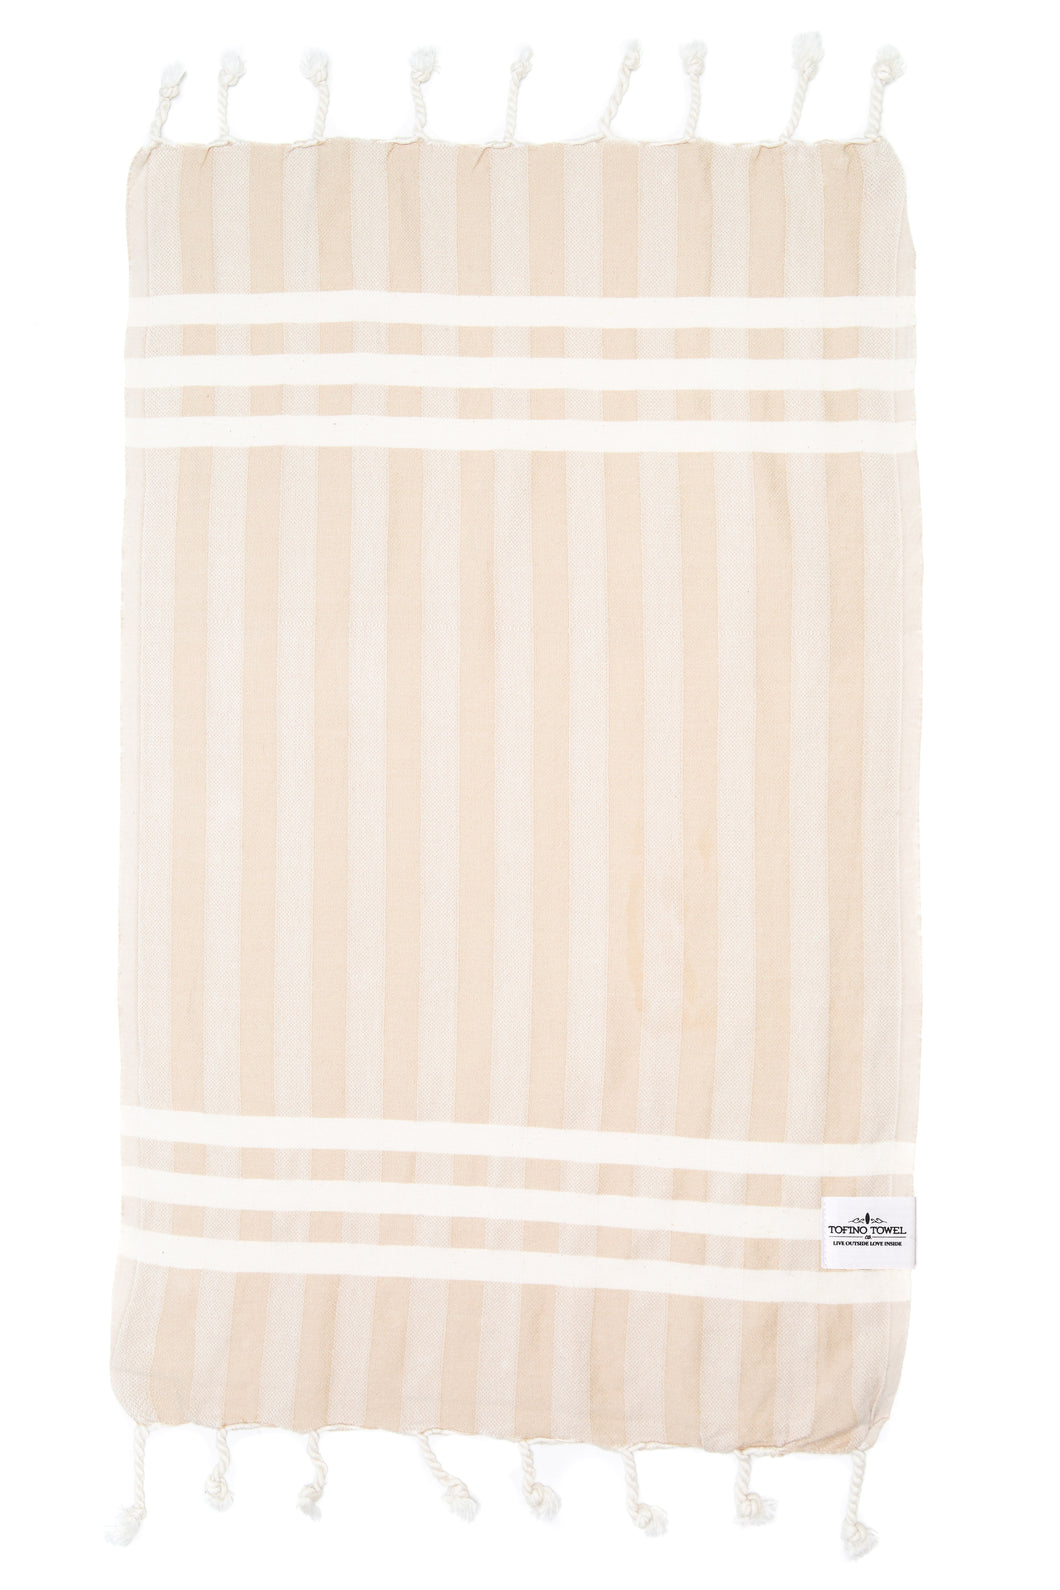 Galley Kitchen Towel -  Tofino Towel Co.